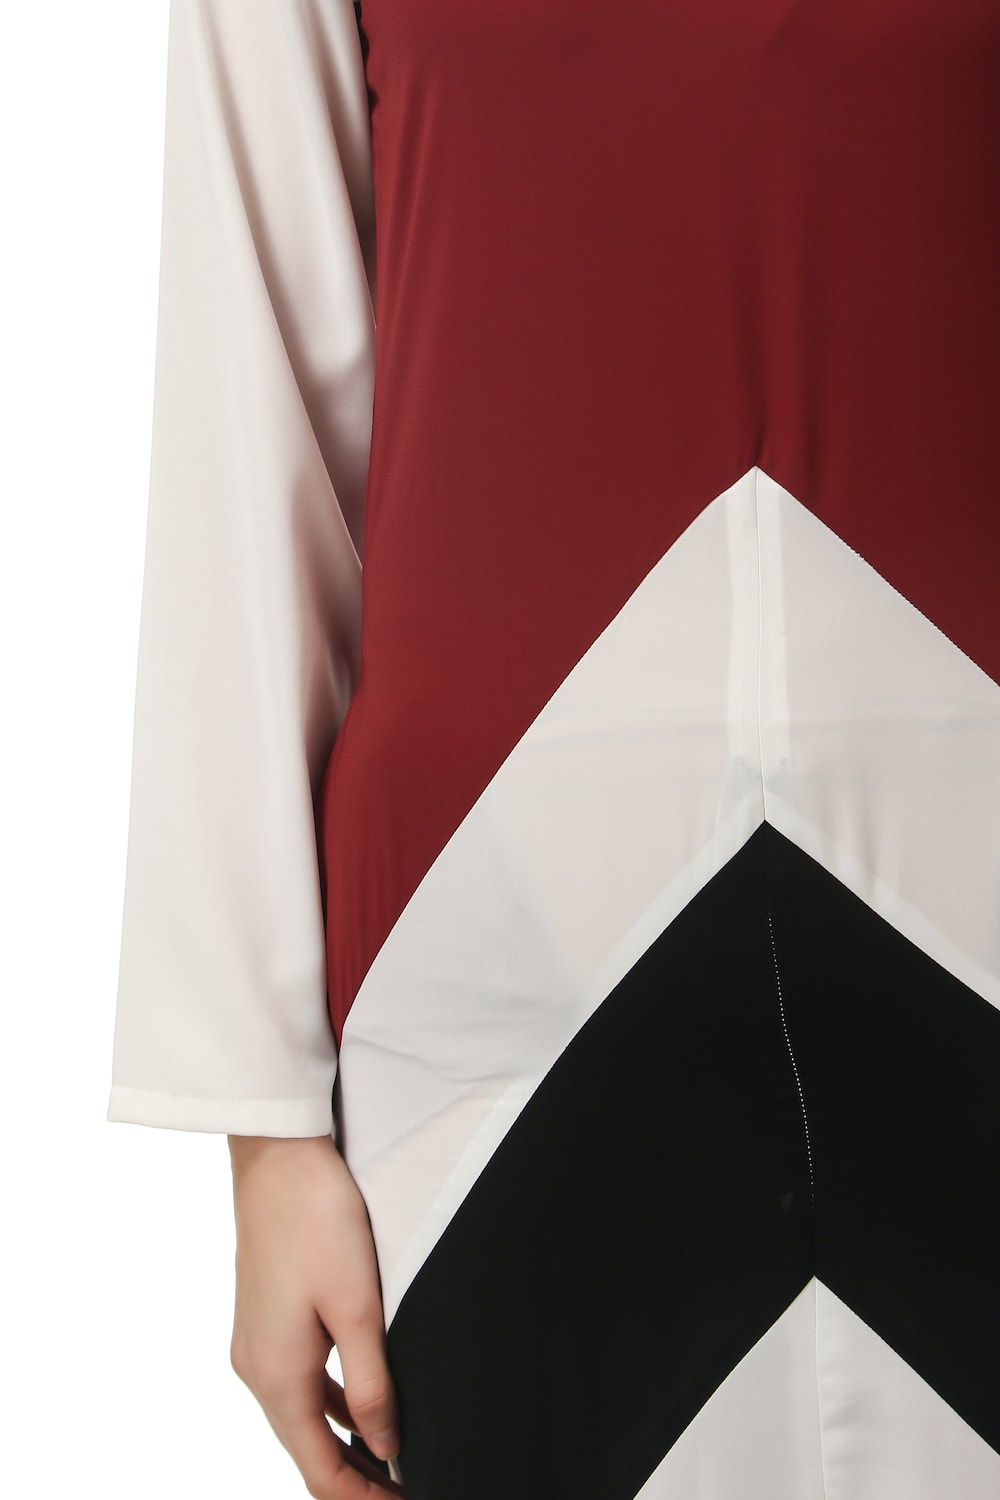 Multi-Cut And Stitch Panel A-Line Abaya Design